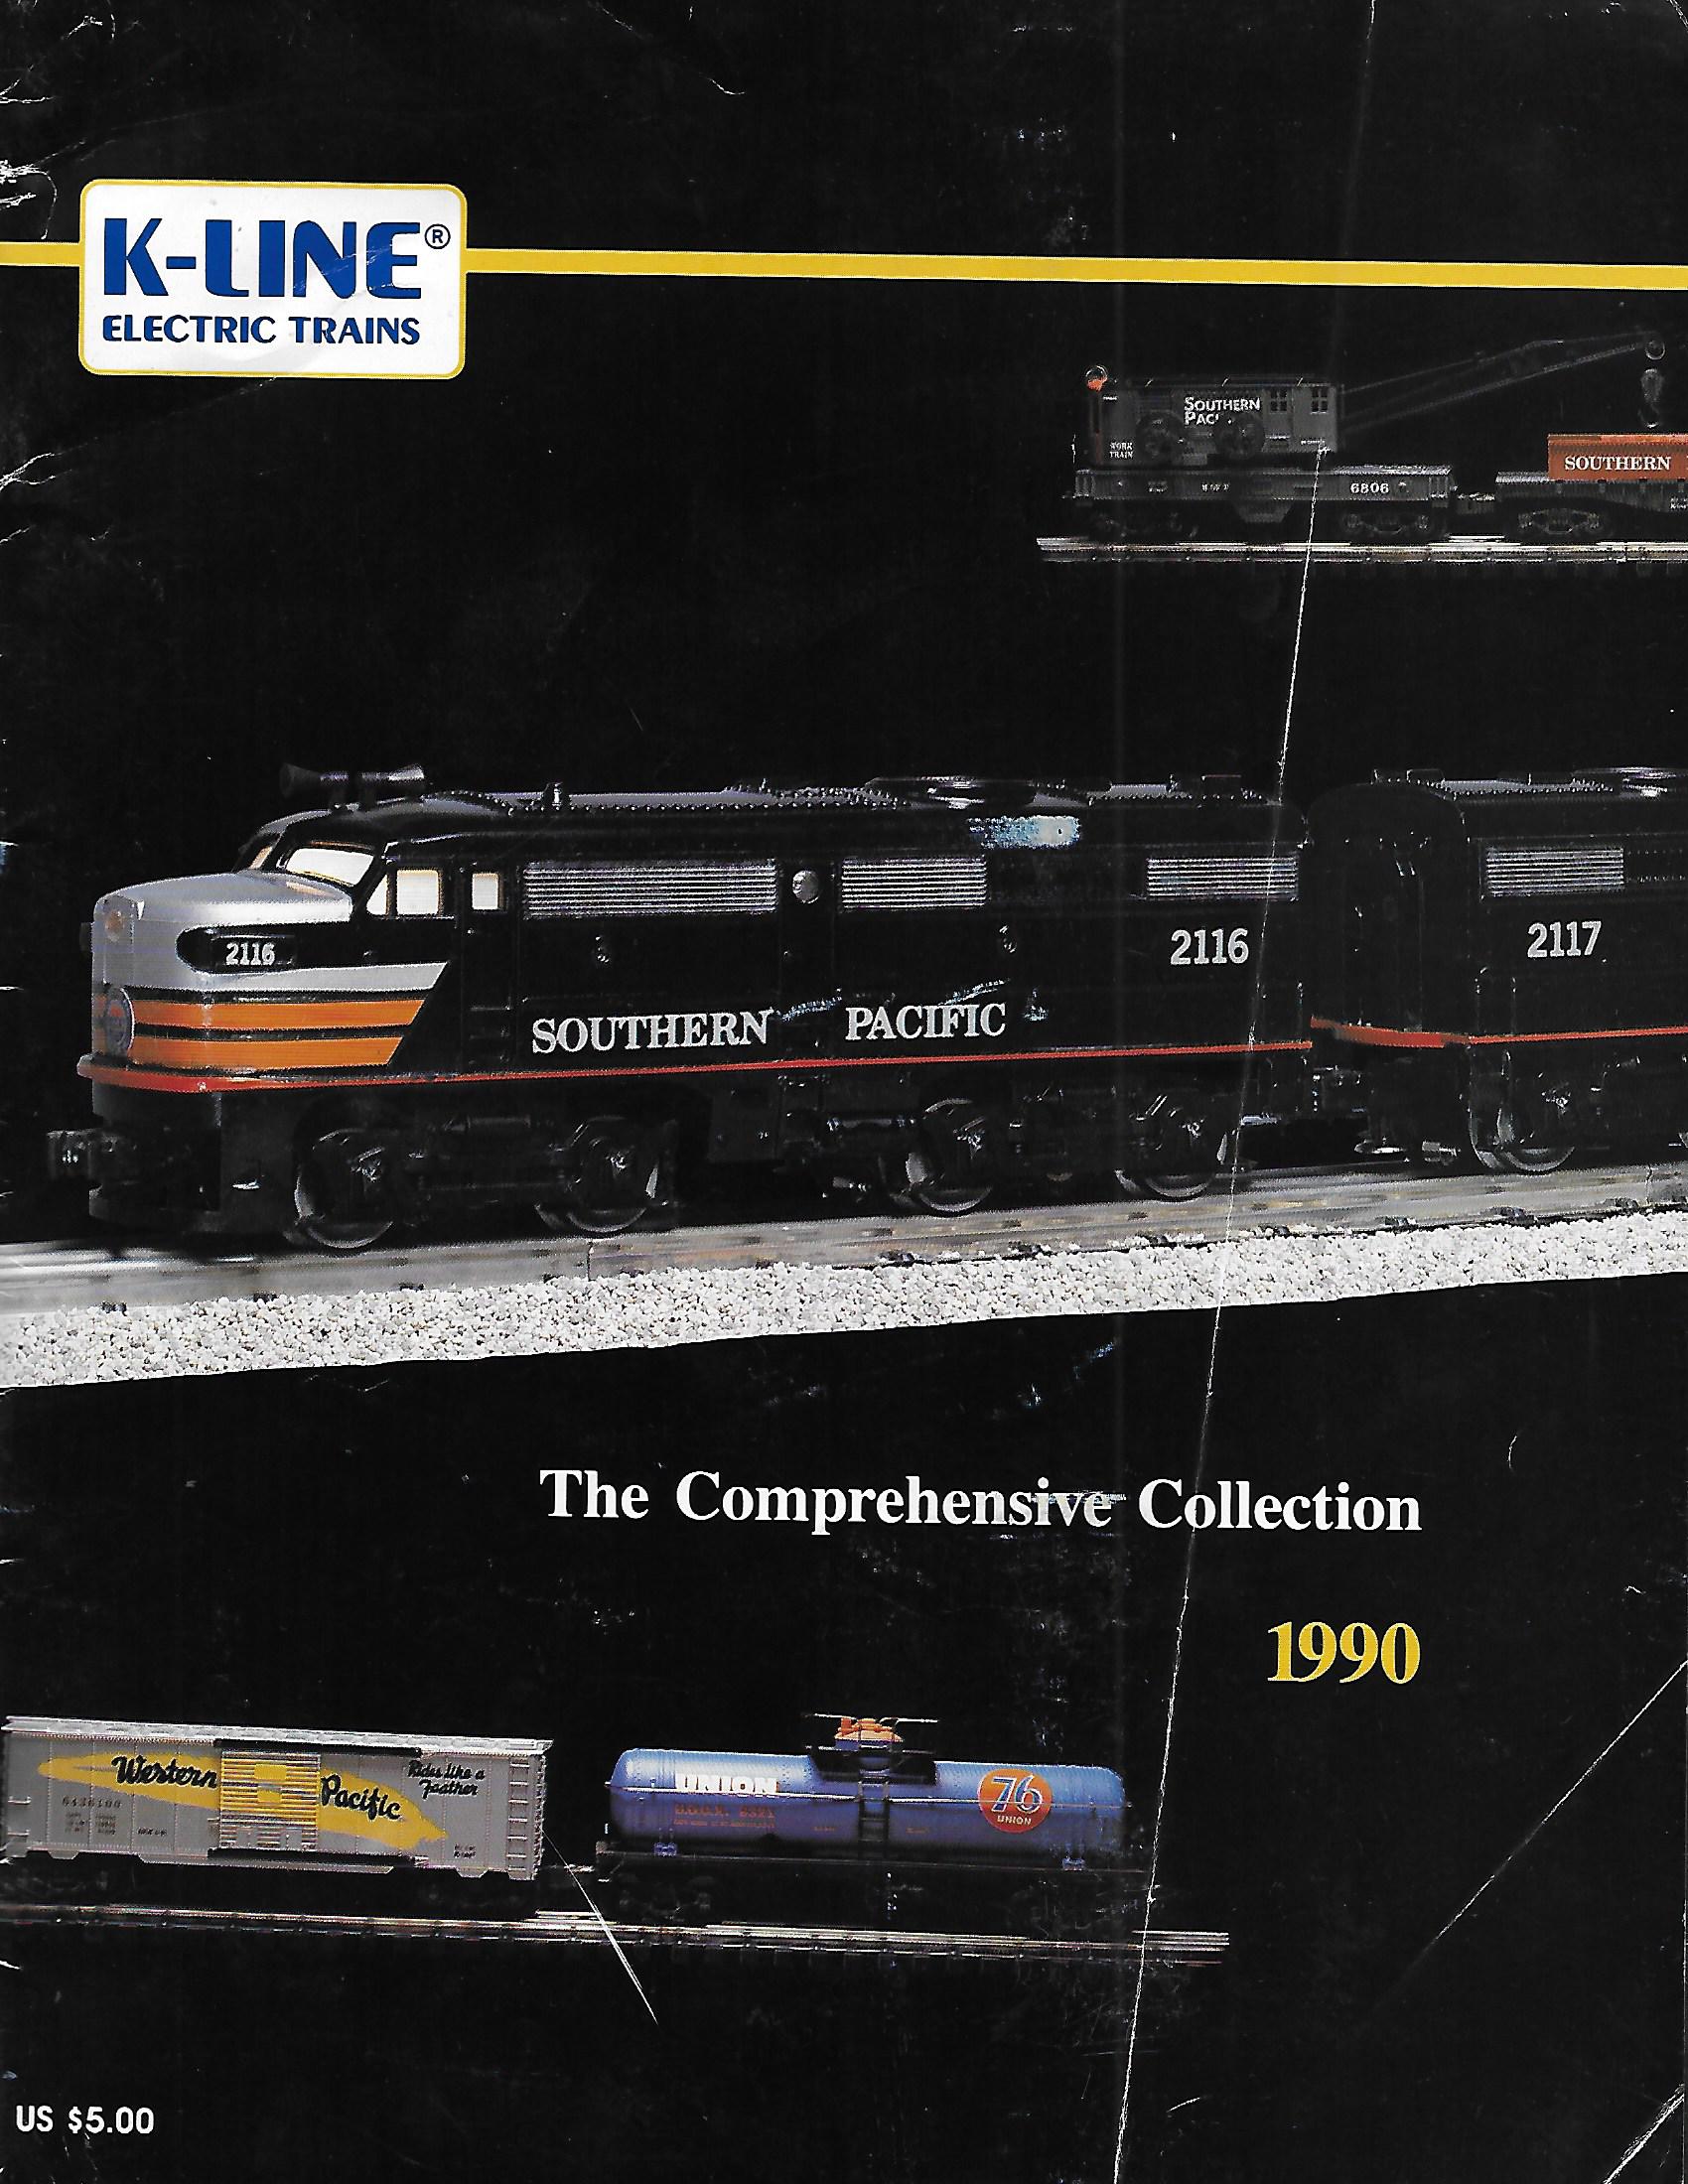 K-Line 1990 "The Comprehensive Collection" Catalog image